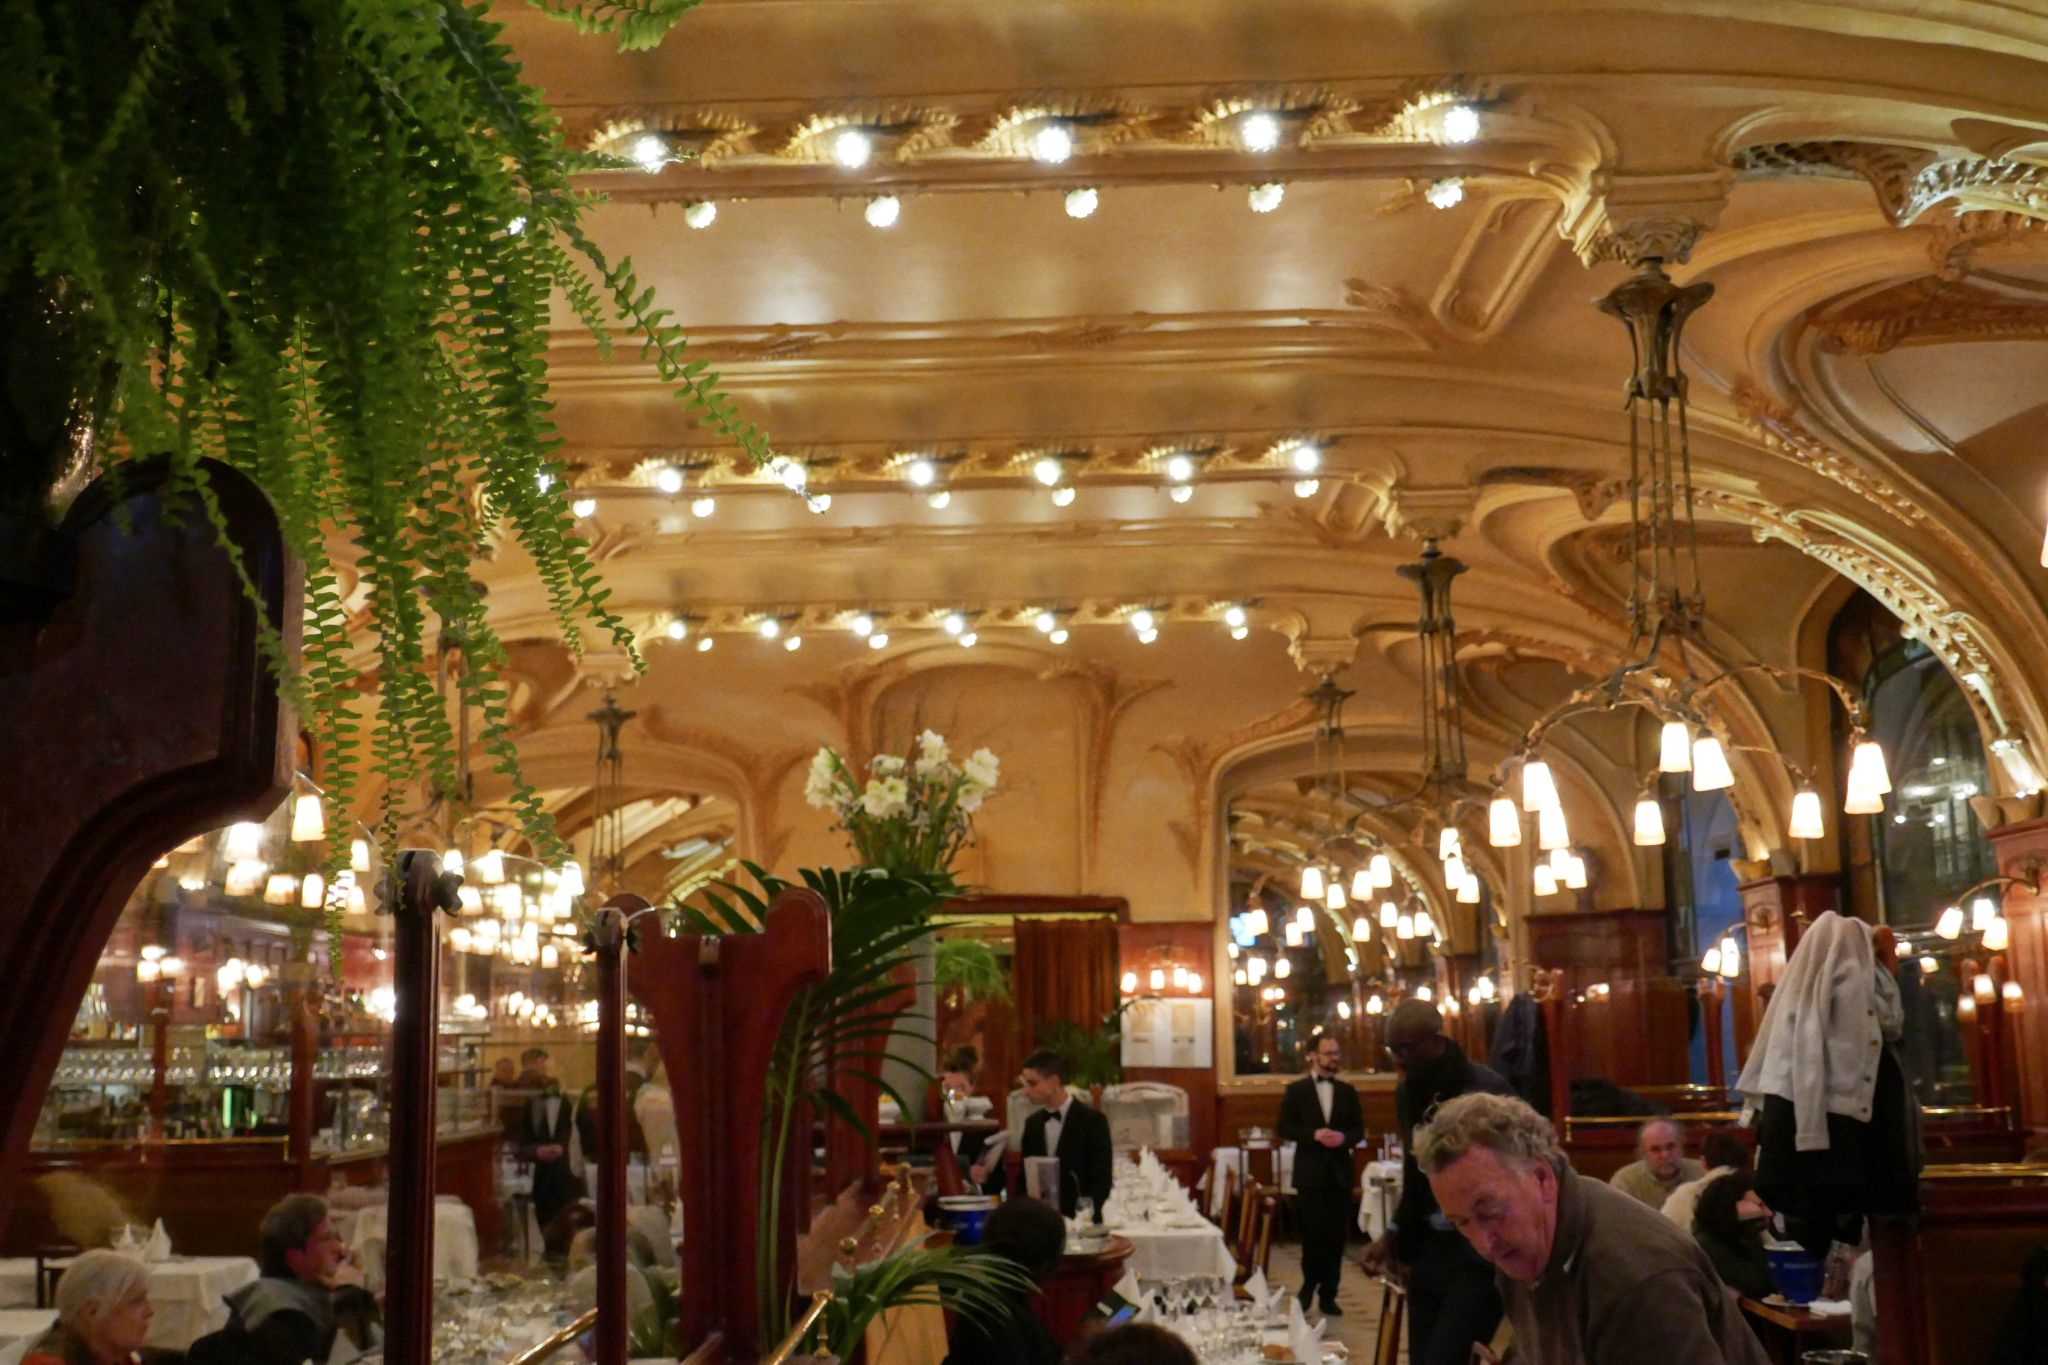 Brasserie Excselsior, an art nouveau restaurant